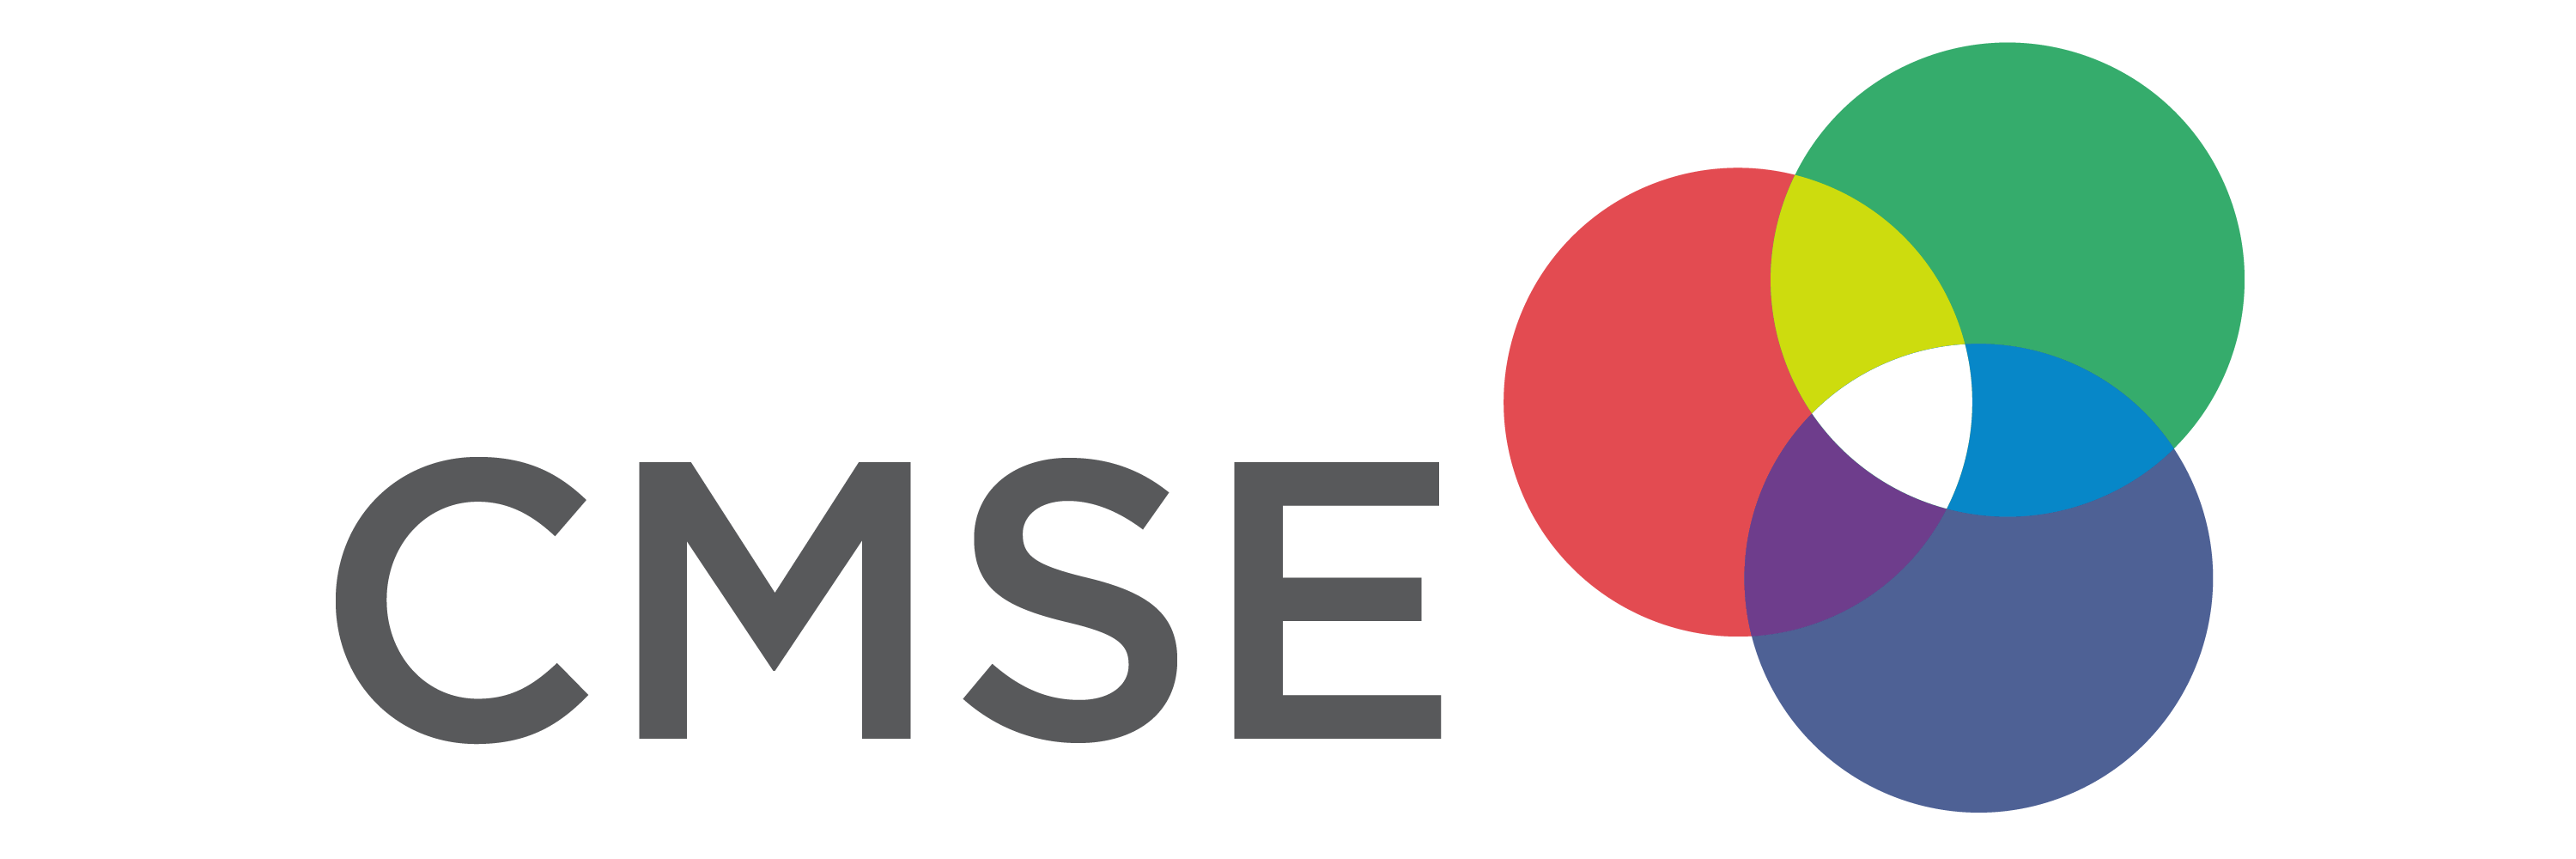 CMSE logo